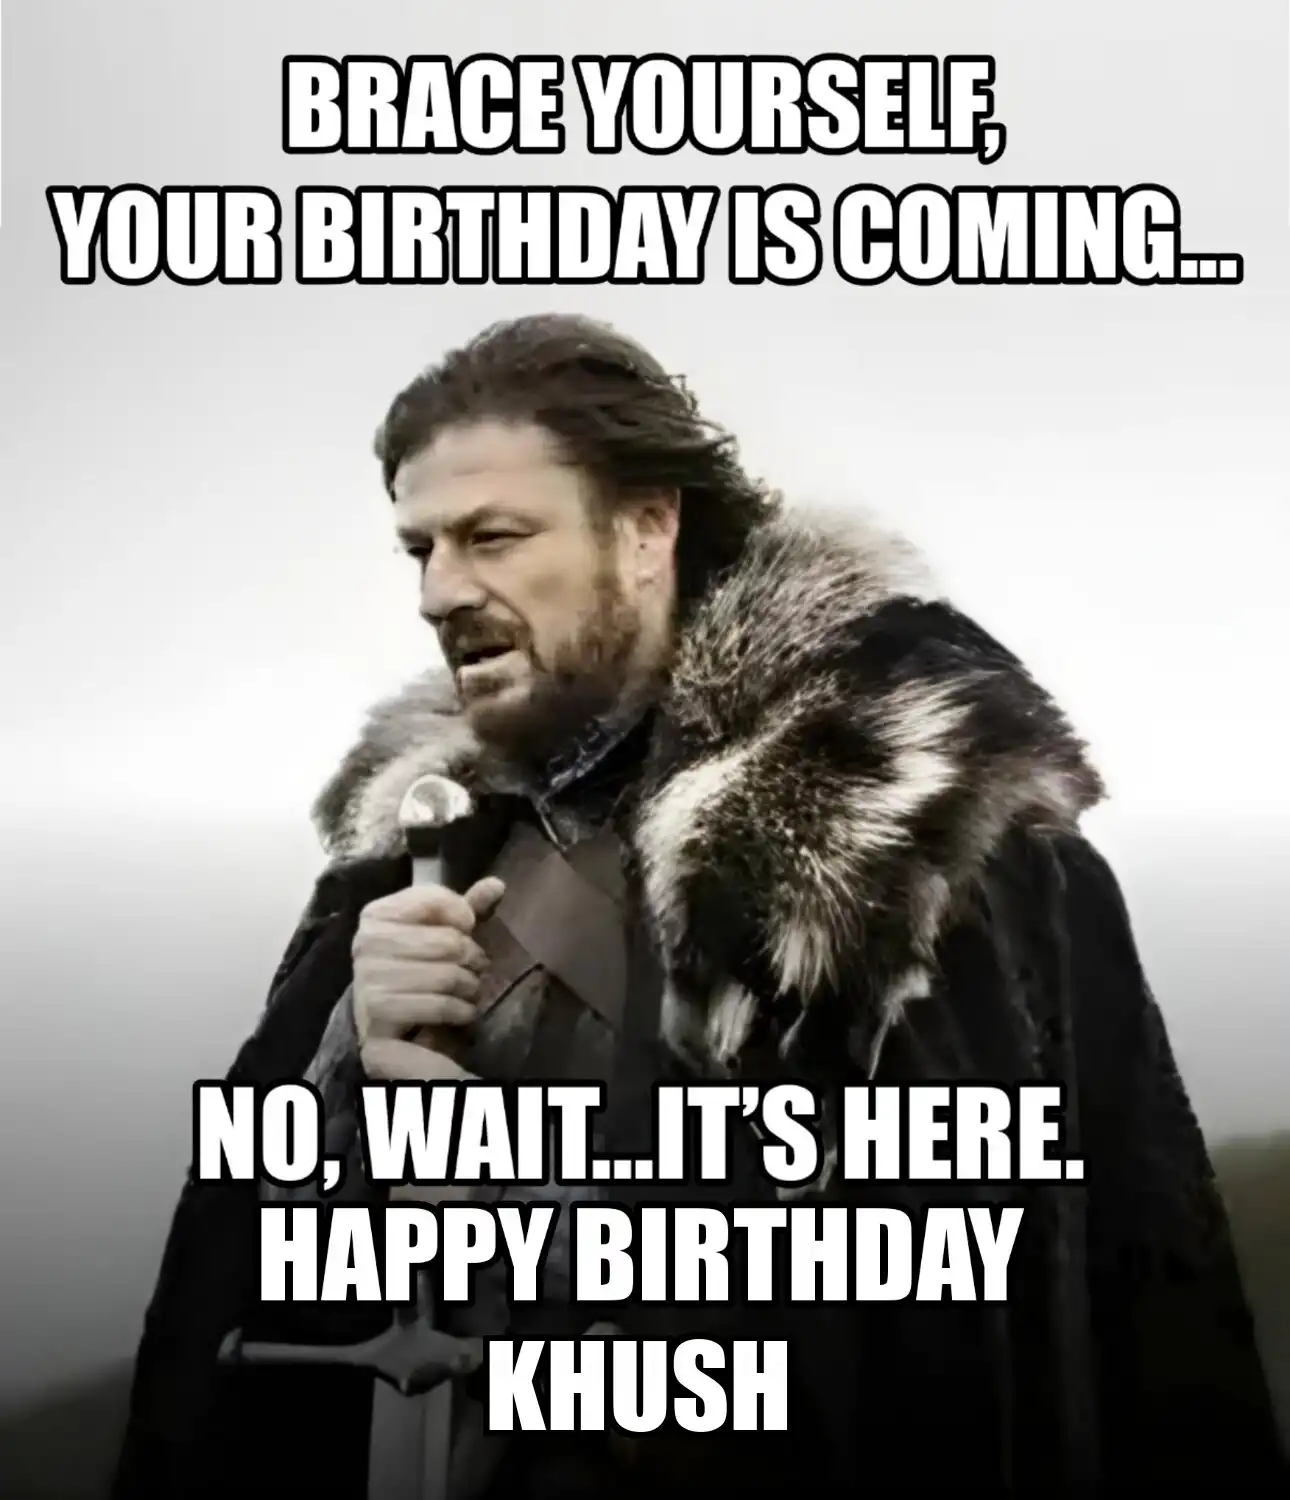 Happy Birthday Khush Brace Yourself Your Birthday Is Coming Meme